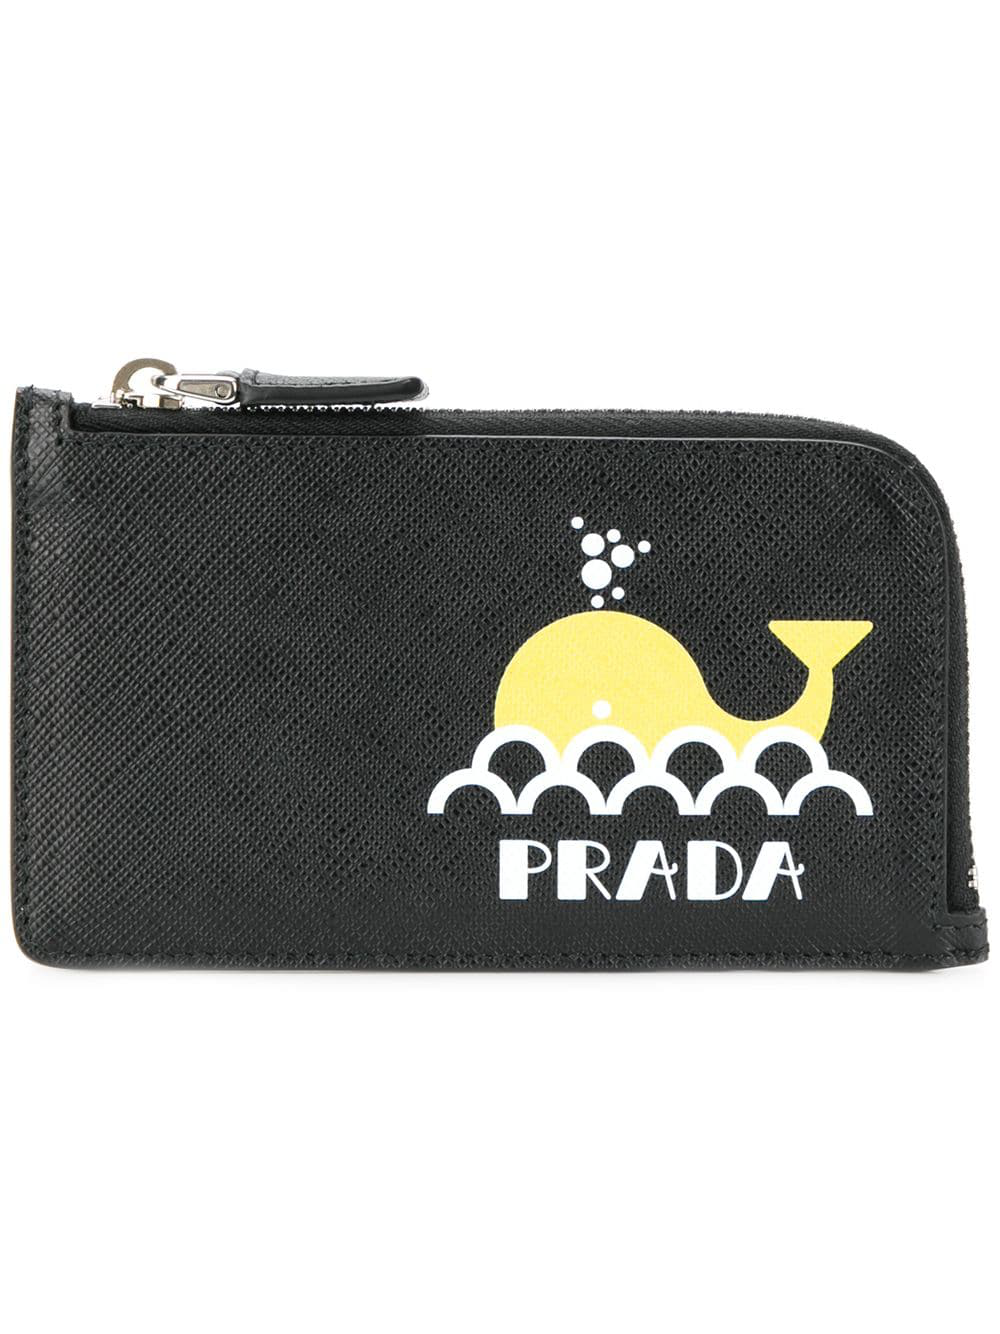 prada whale wallet